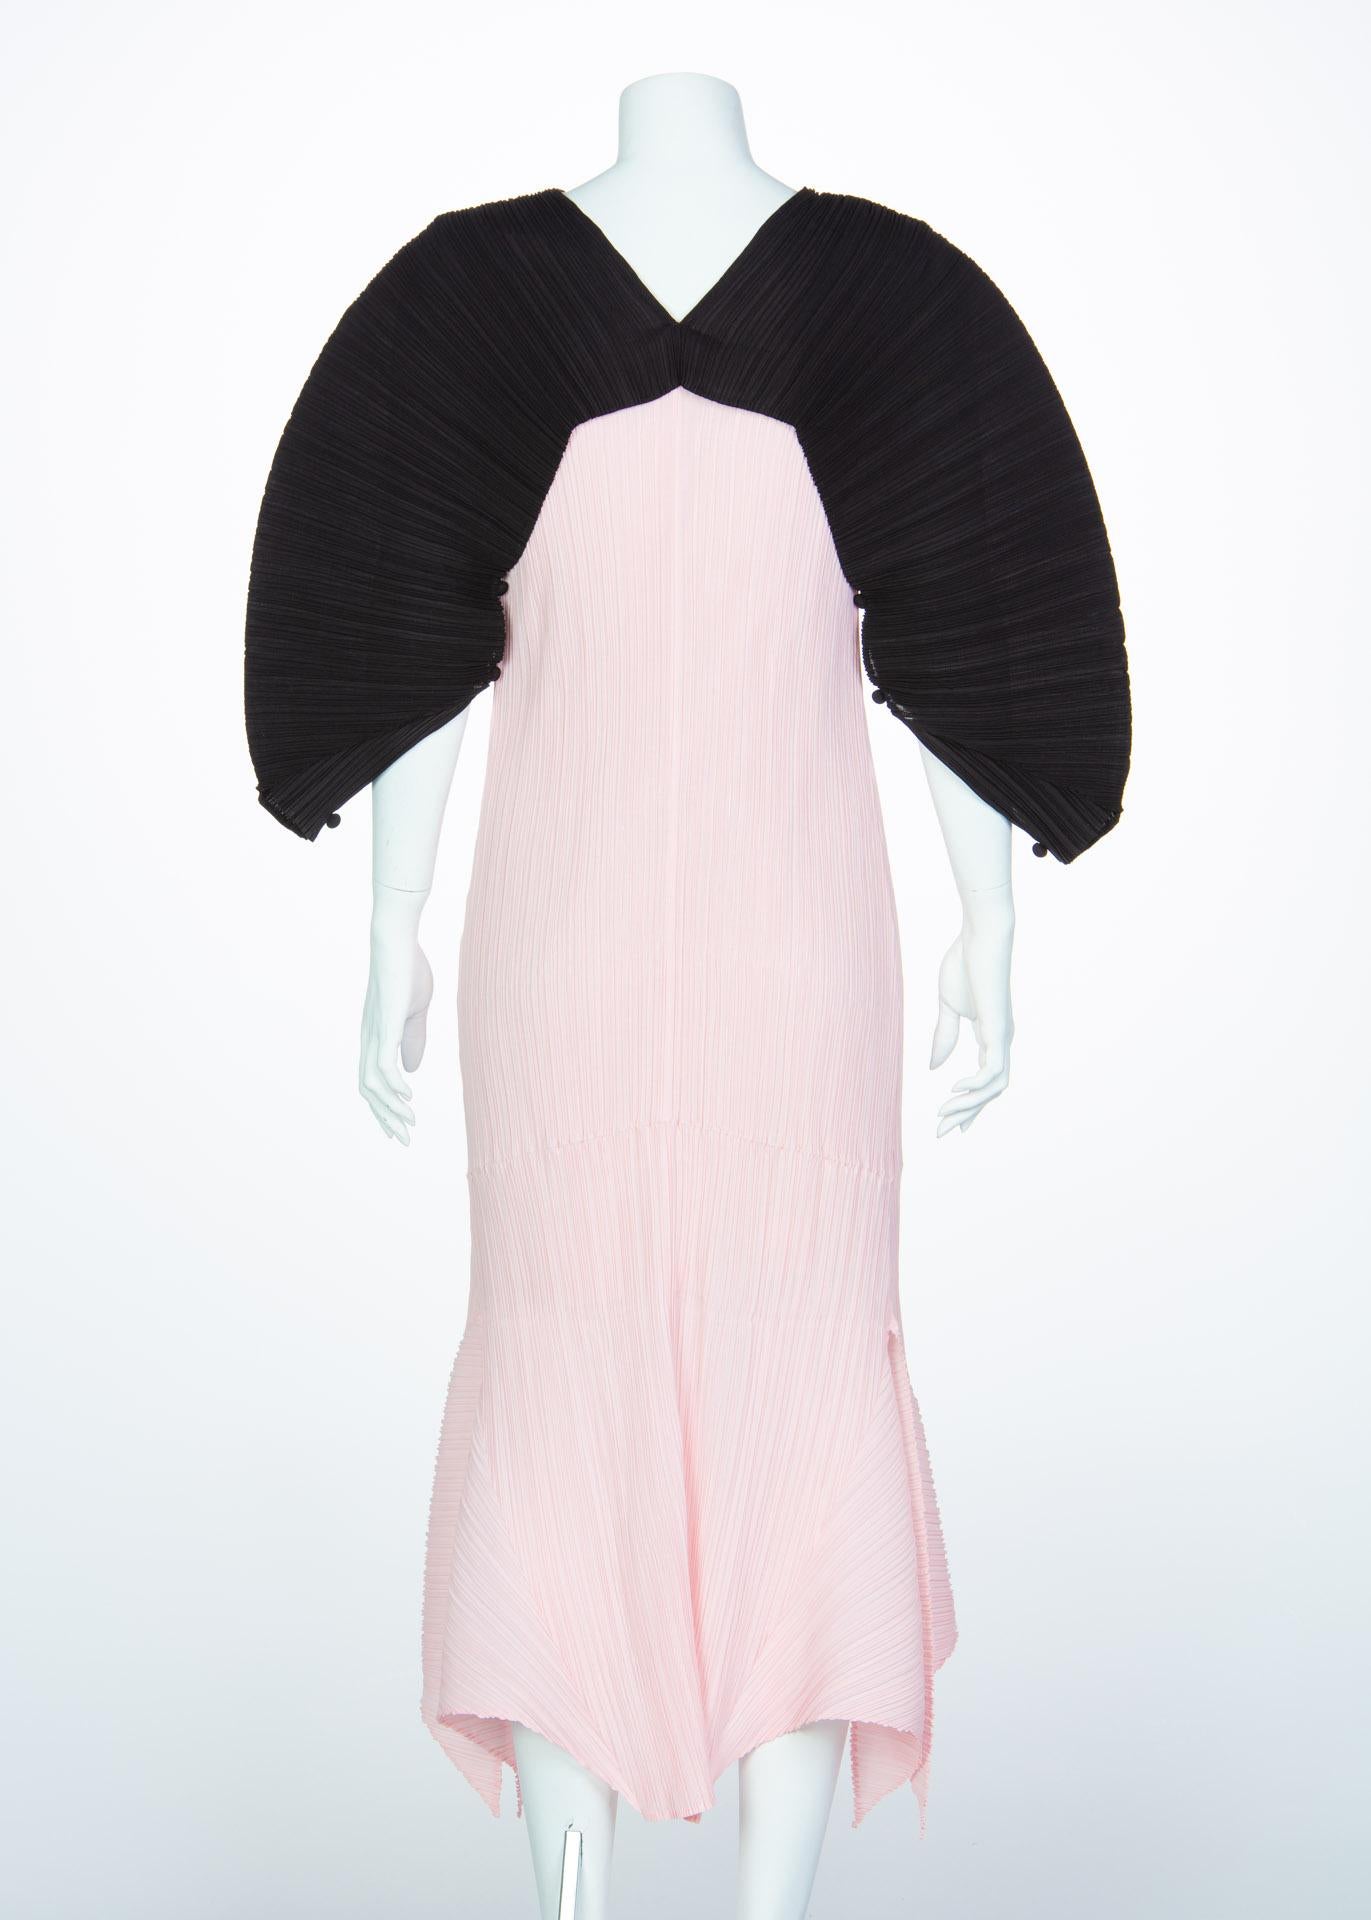 Women's Issey Miyake Fette Pink Black Pleated Origami Dress